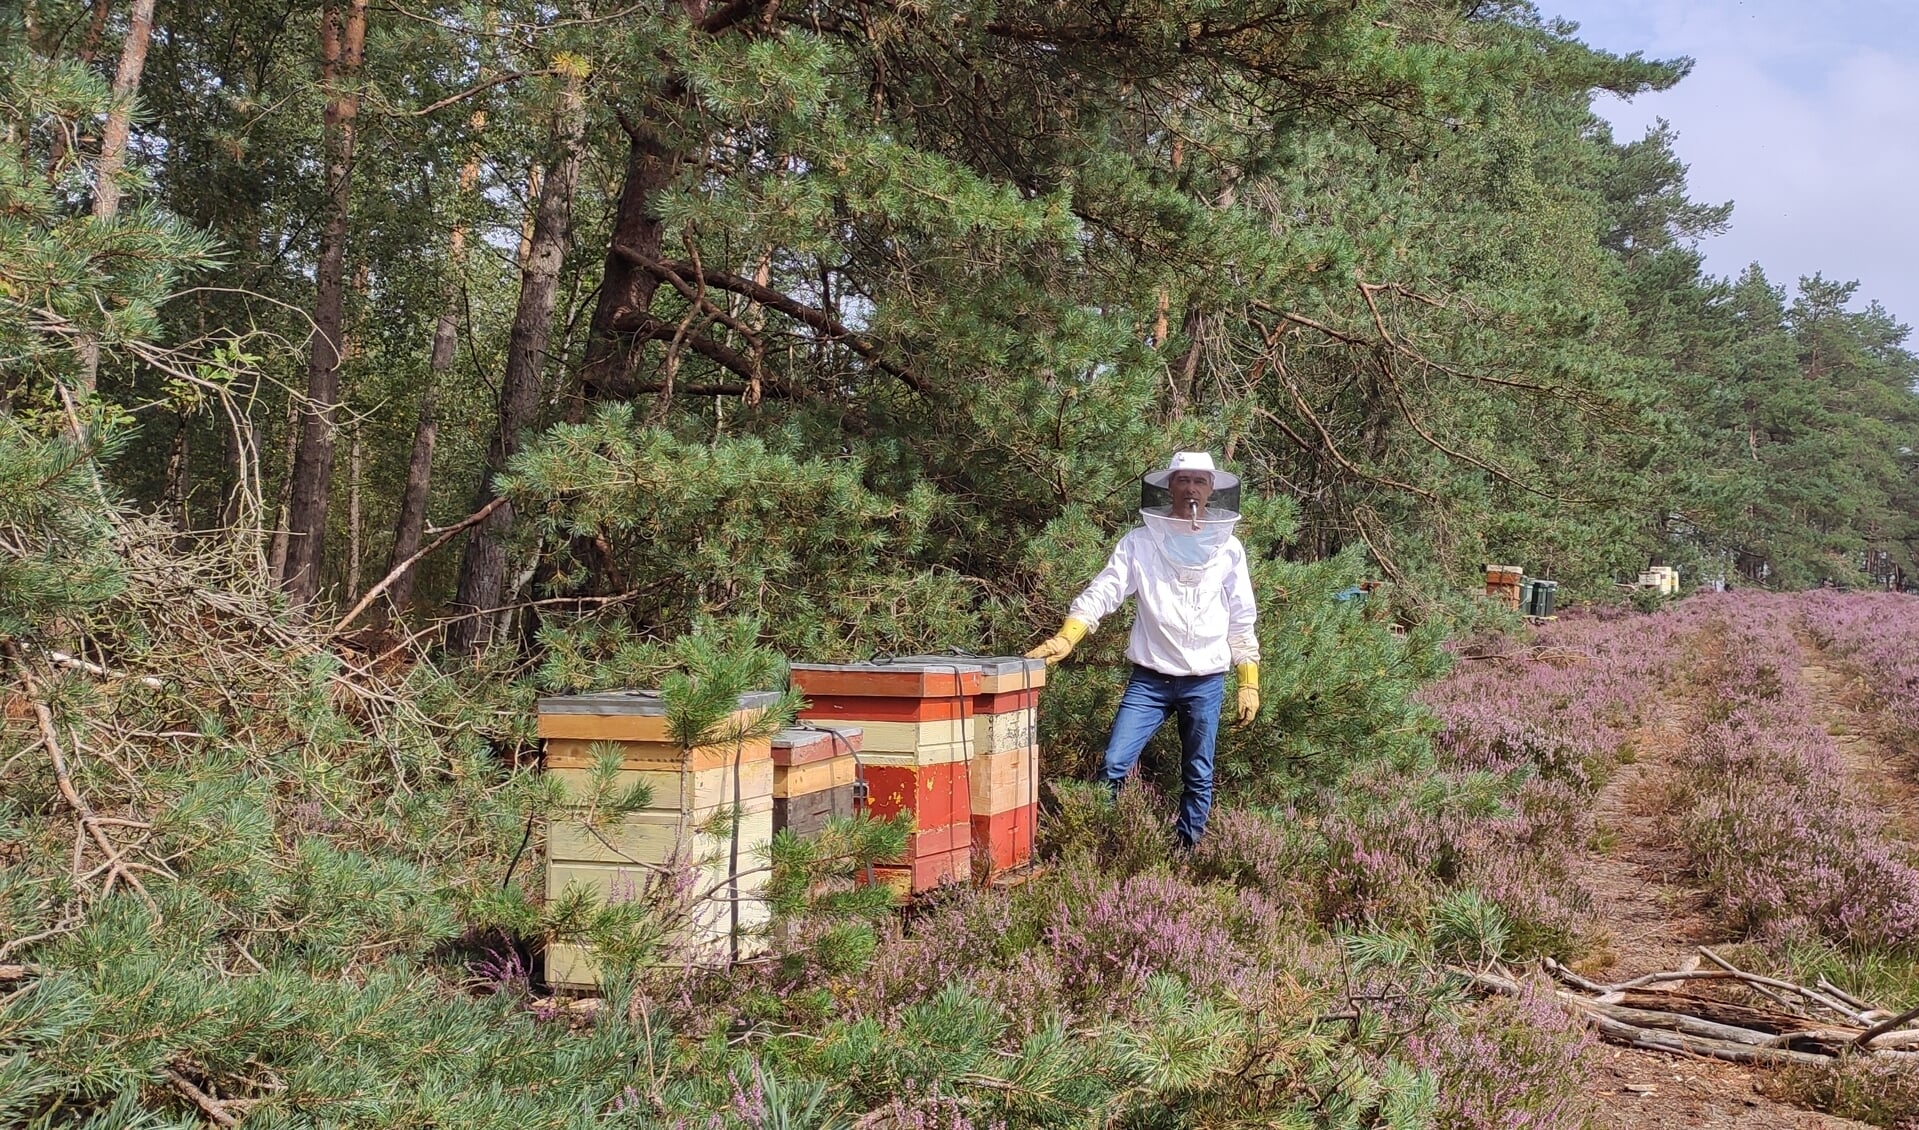 Bijen kasten op de heide. (foto: Rob Moret)